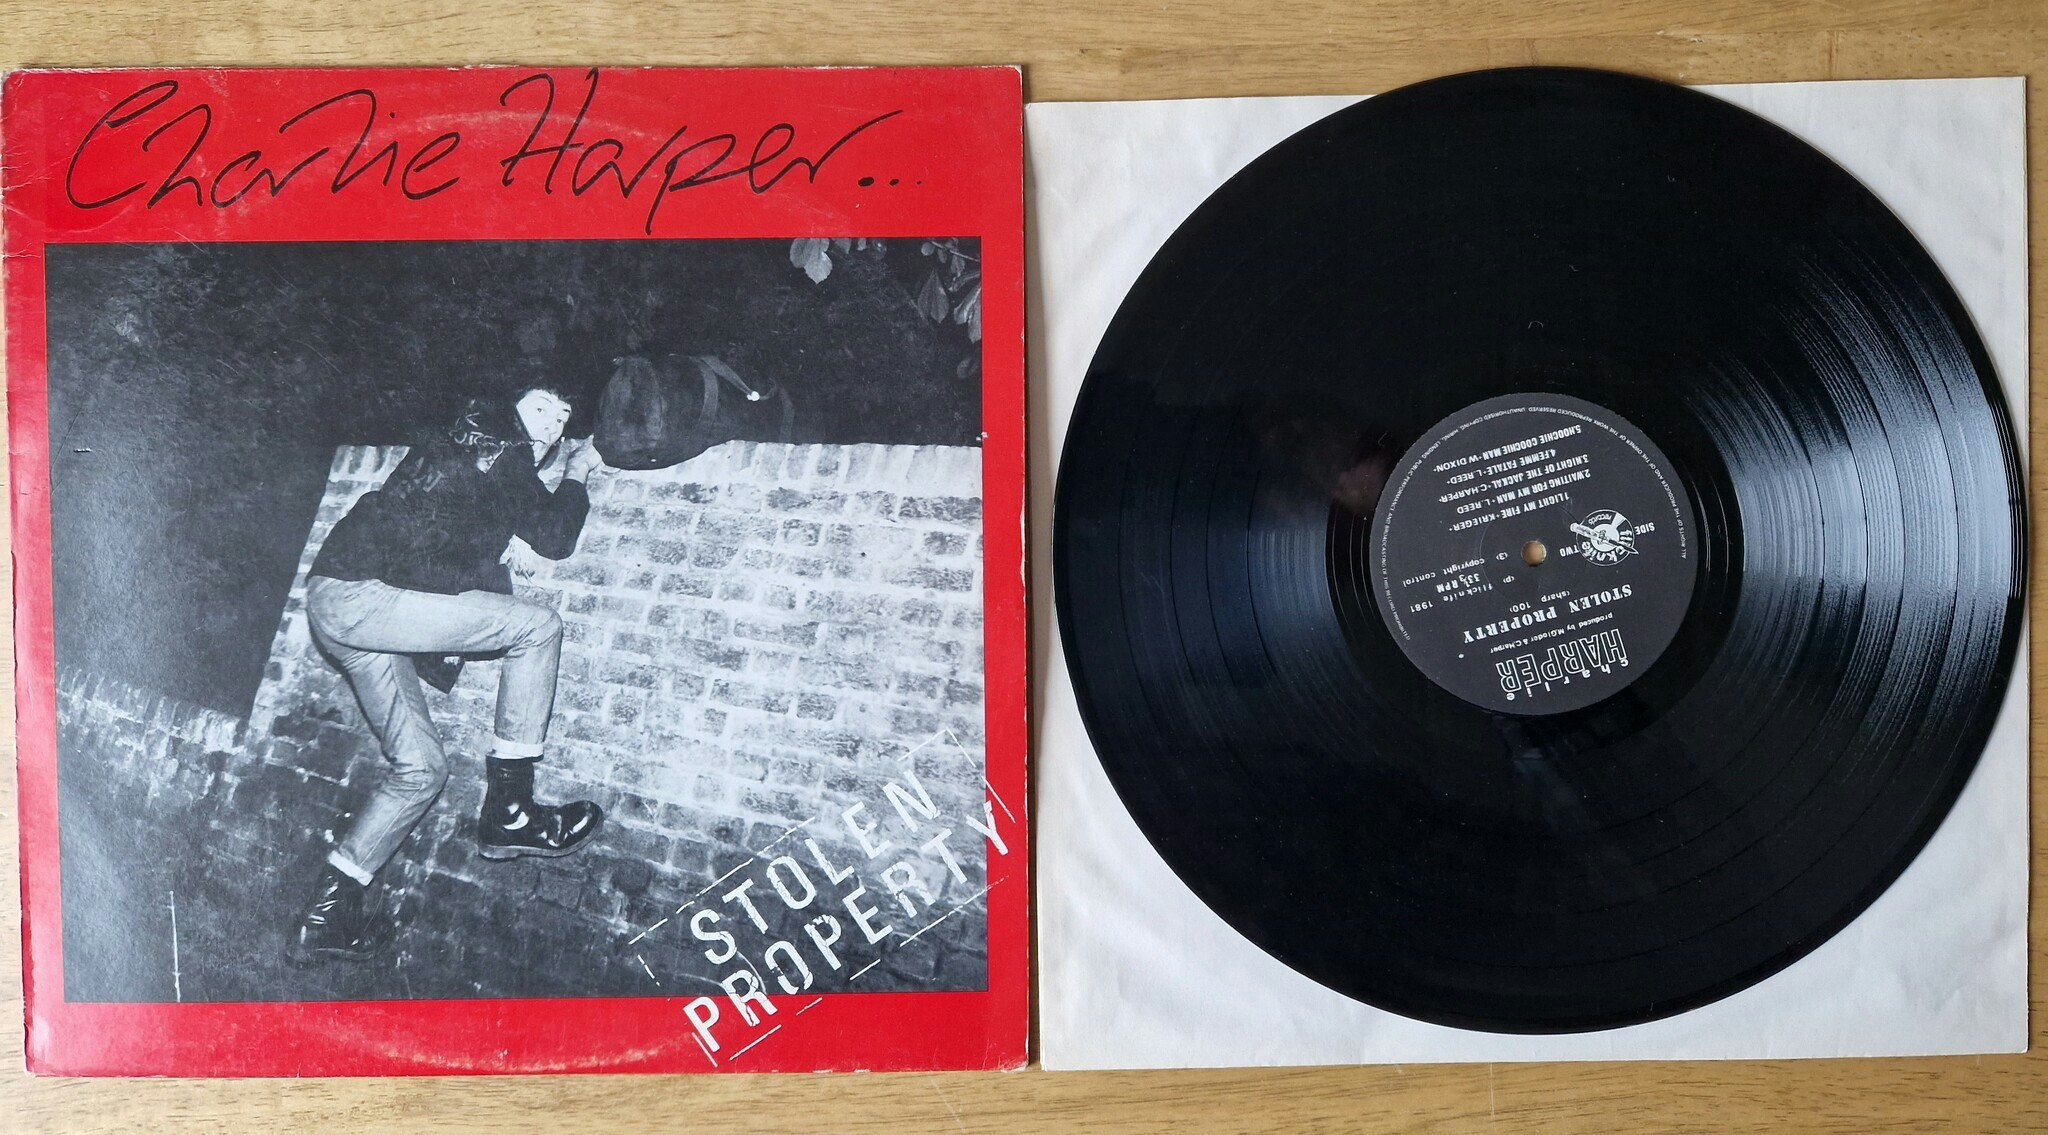 Charlie Harper, Stolen property. Vinyl LP